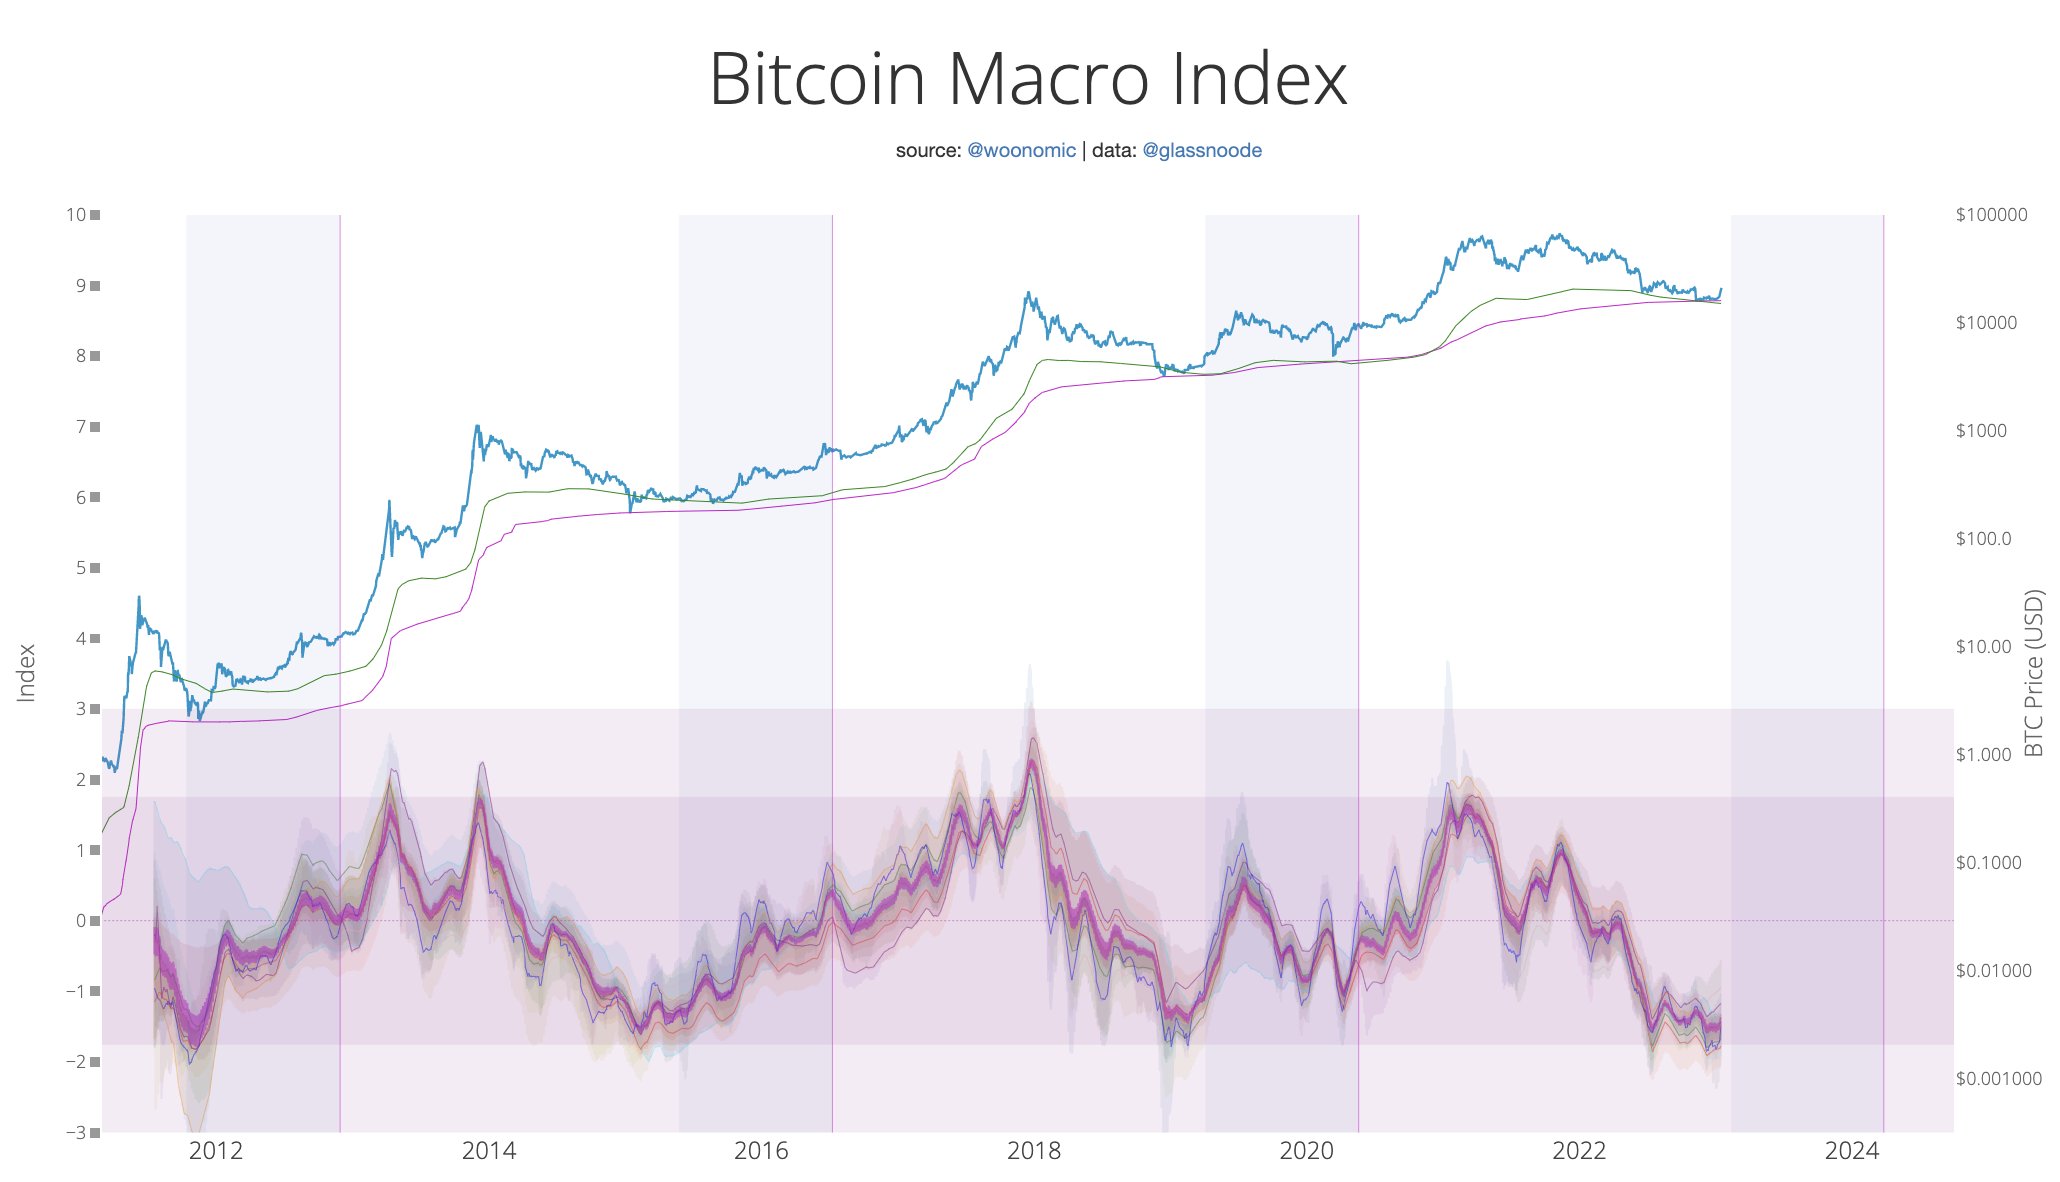 Bitcoin macro index